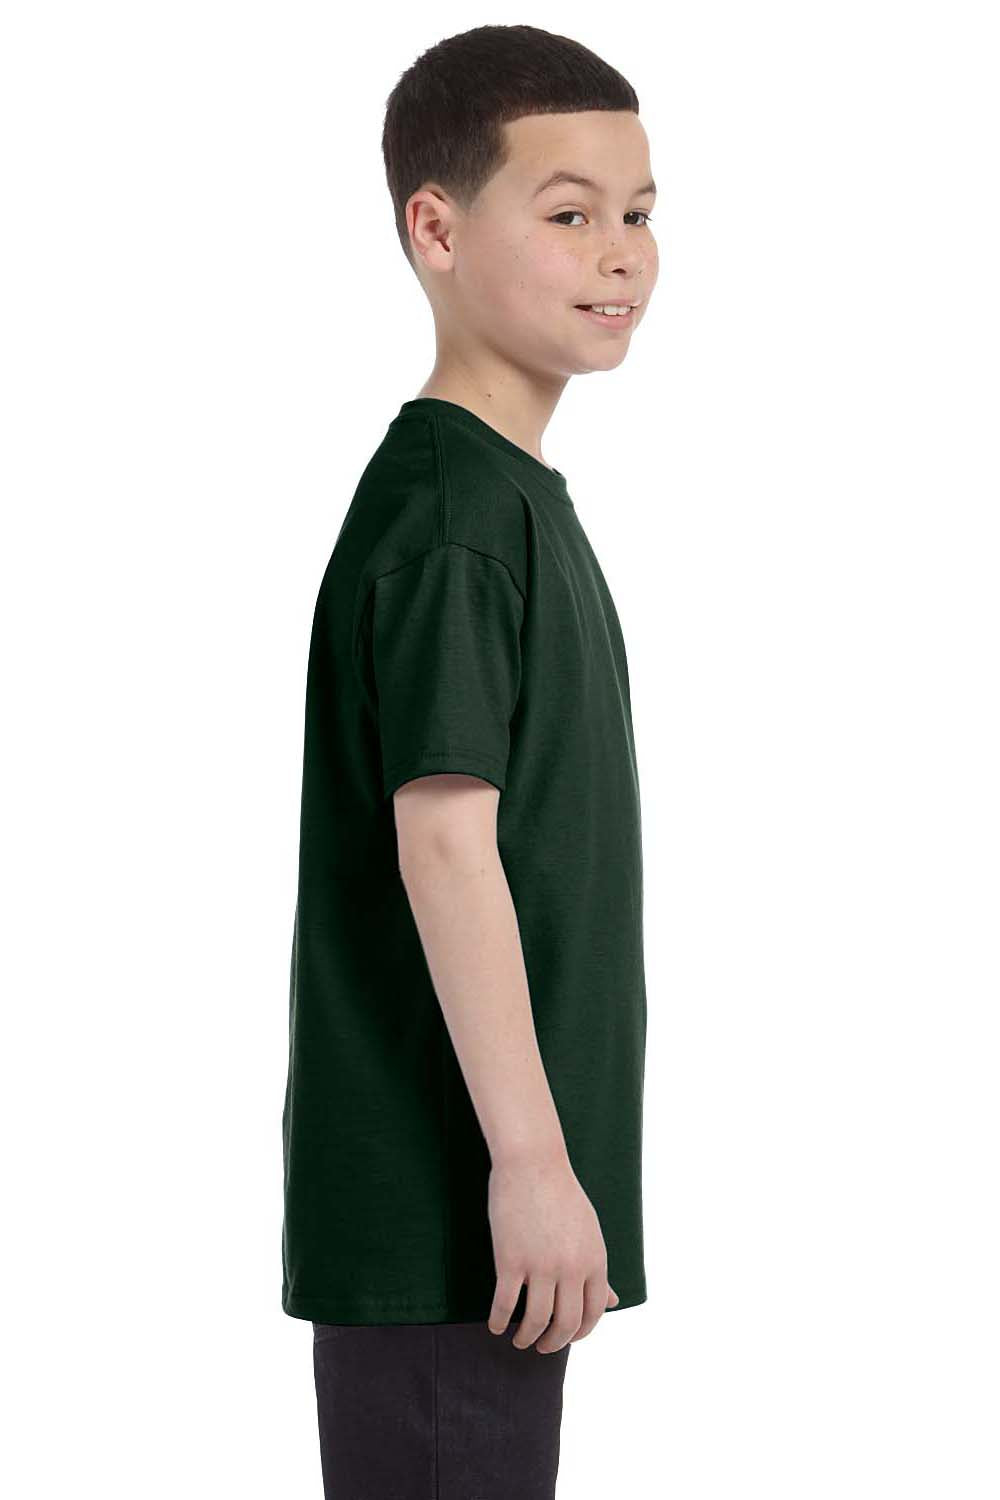 Jerzees 29B Youth Dri-Power Moisture Wicking Short Sleeve Crewneck T-Shirt Forest Green Side